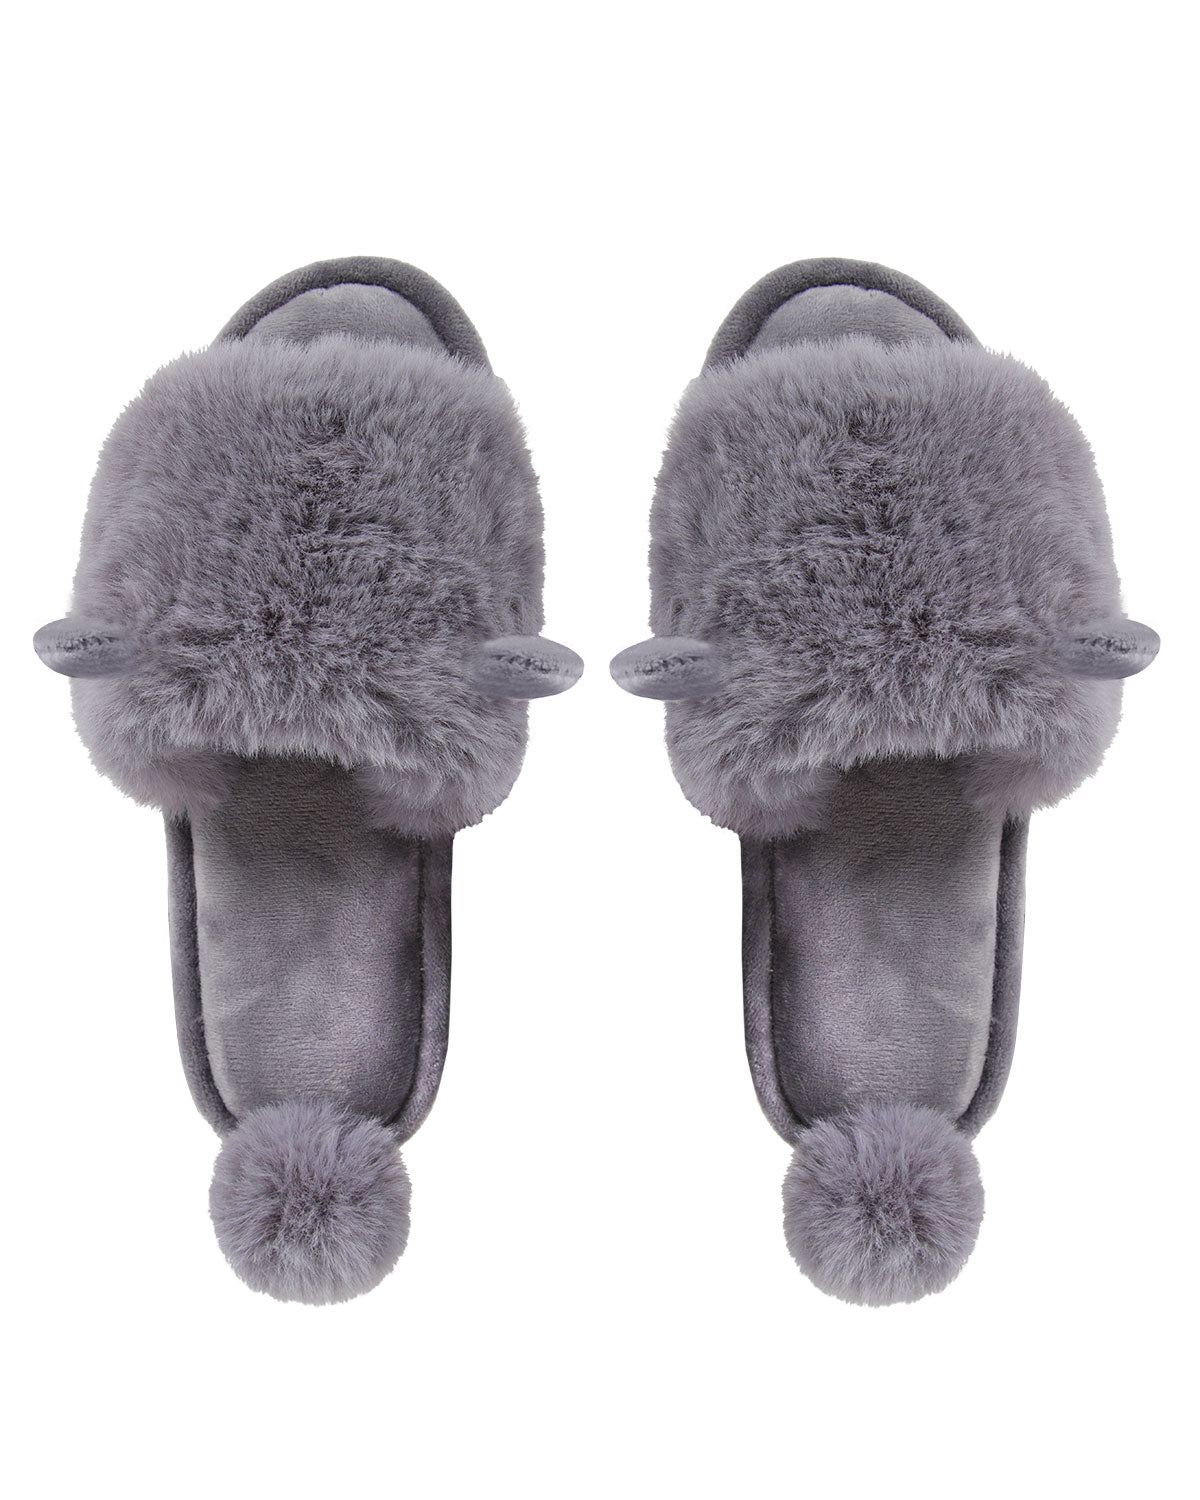 Bunny Hop Pom-Pom Open Toe Plush Slippers